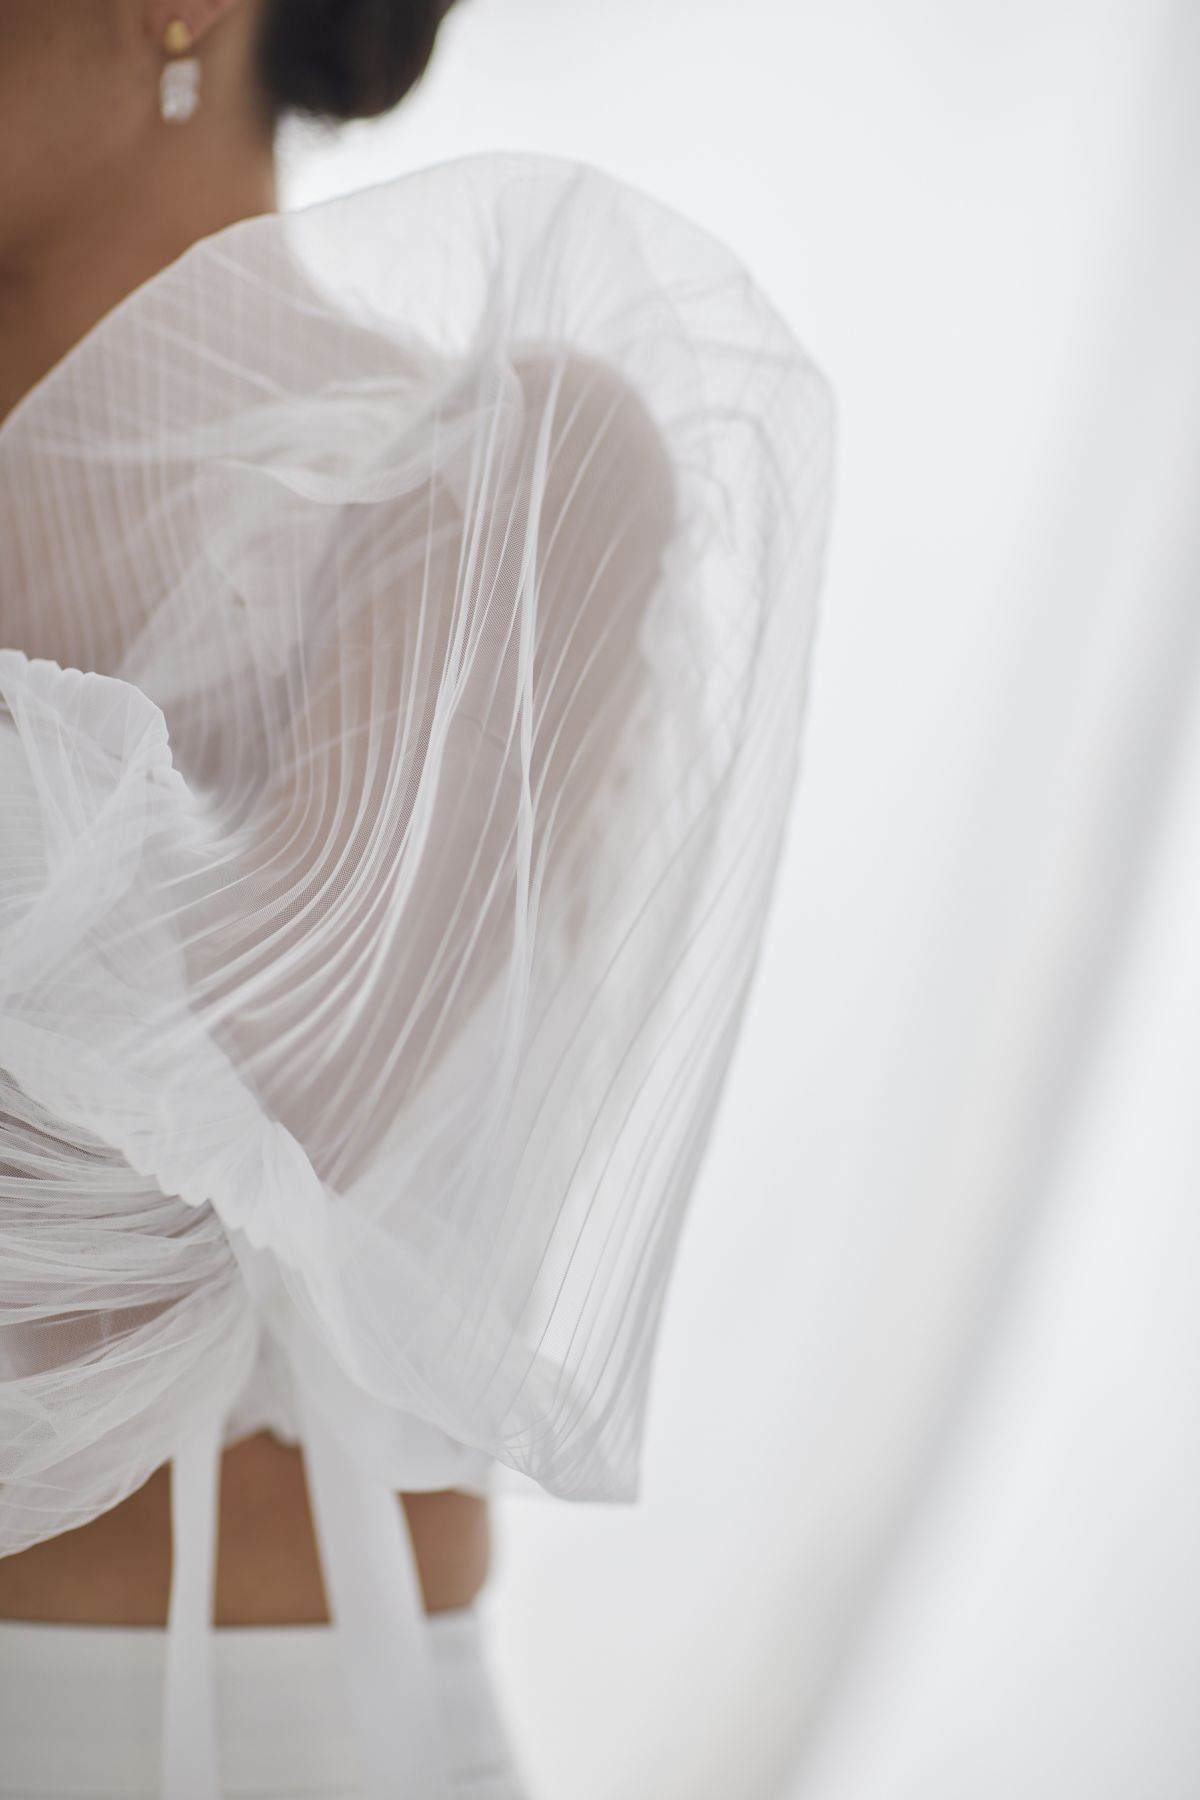 Onda Sleeves Pleated Tulle Wedding Gown 53_3668